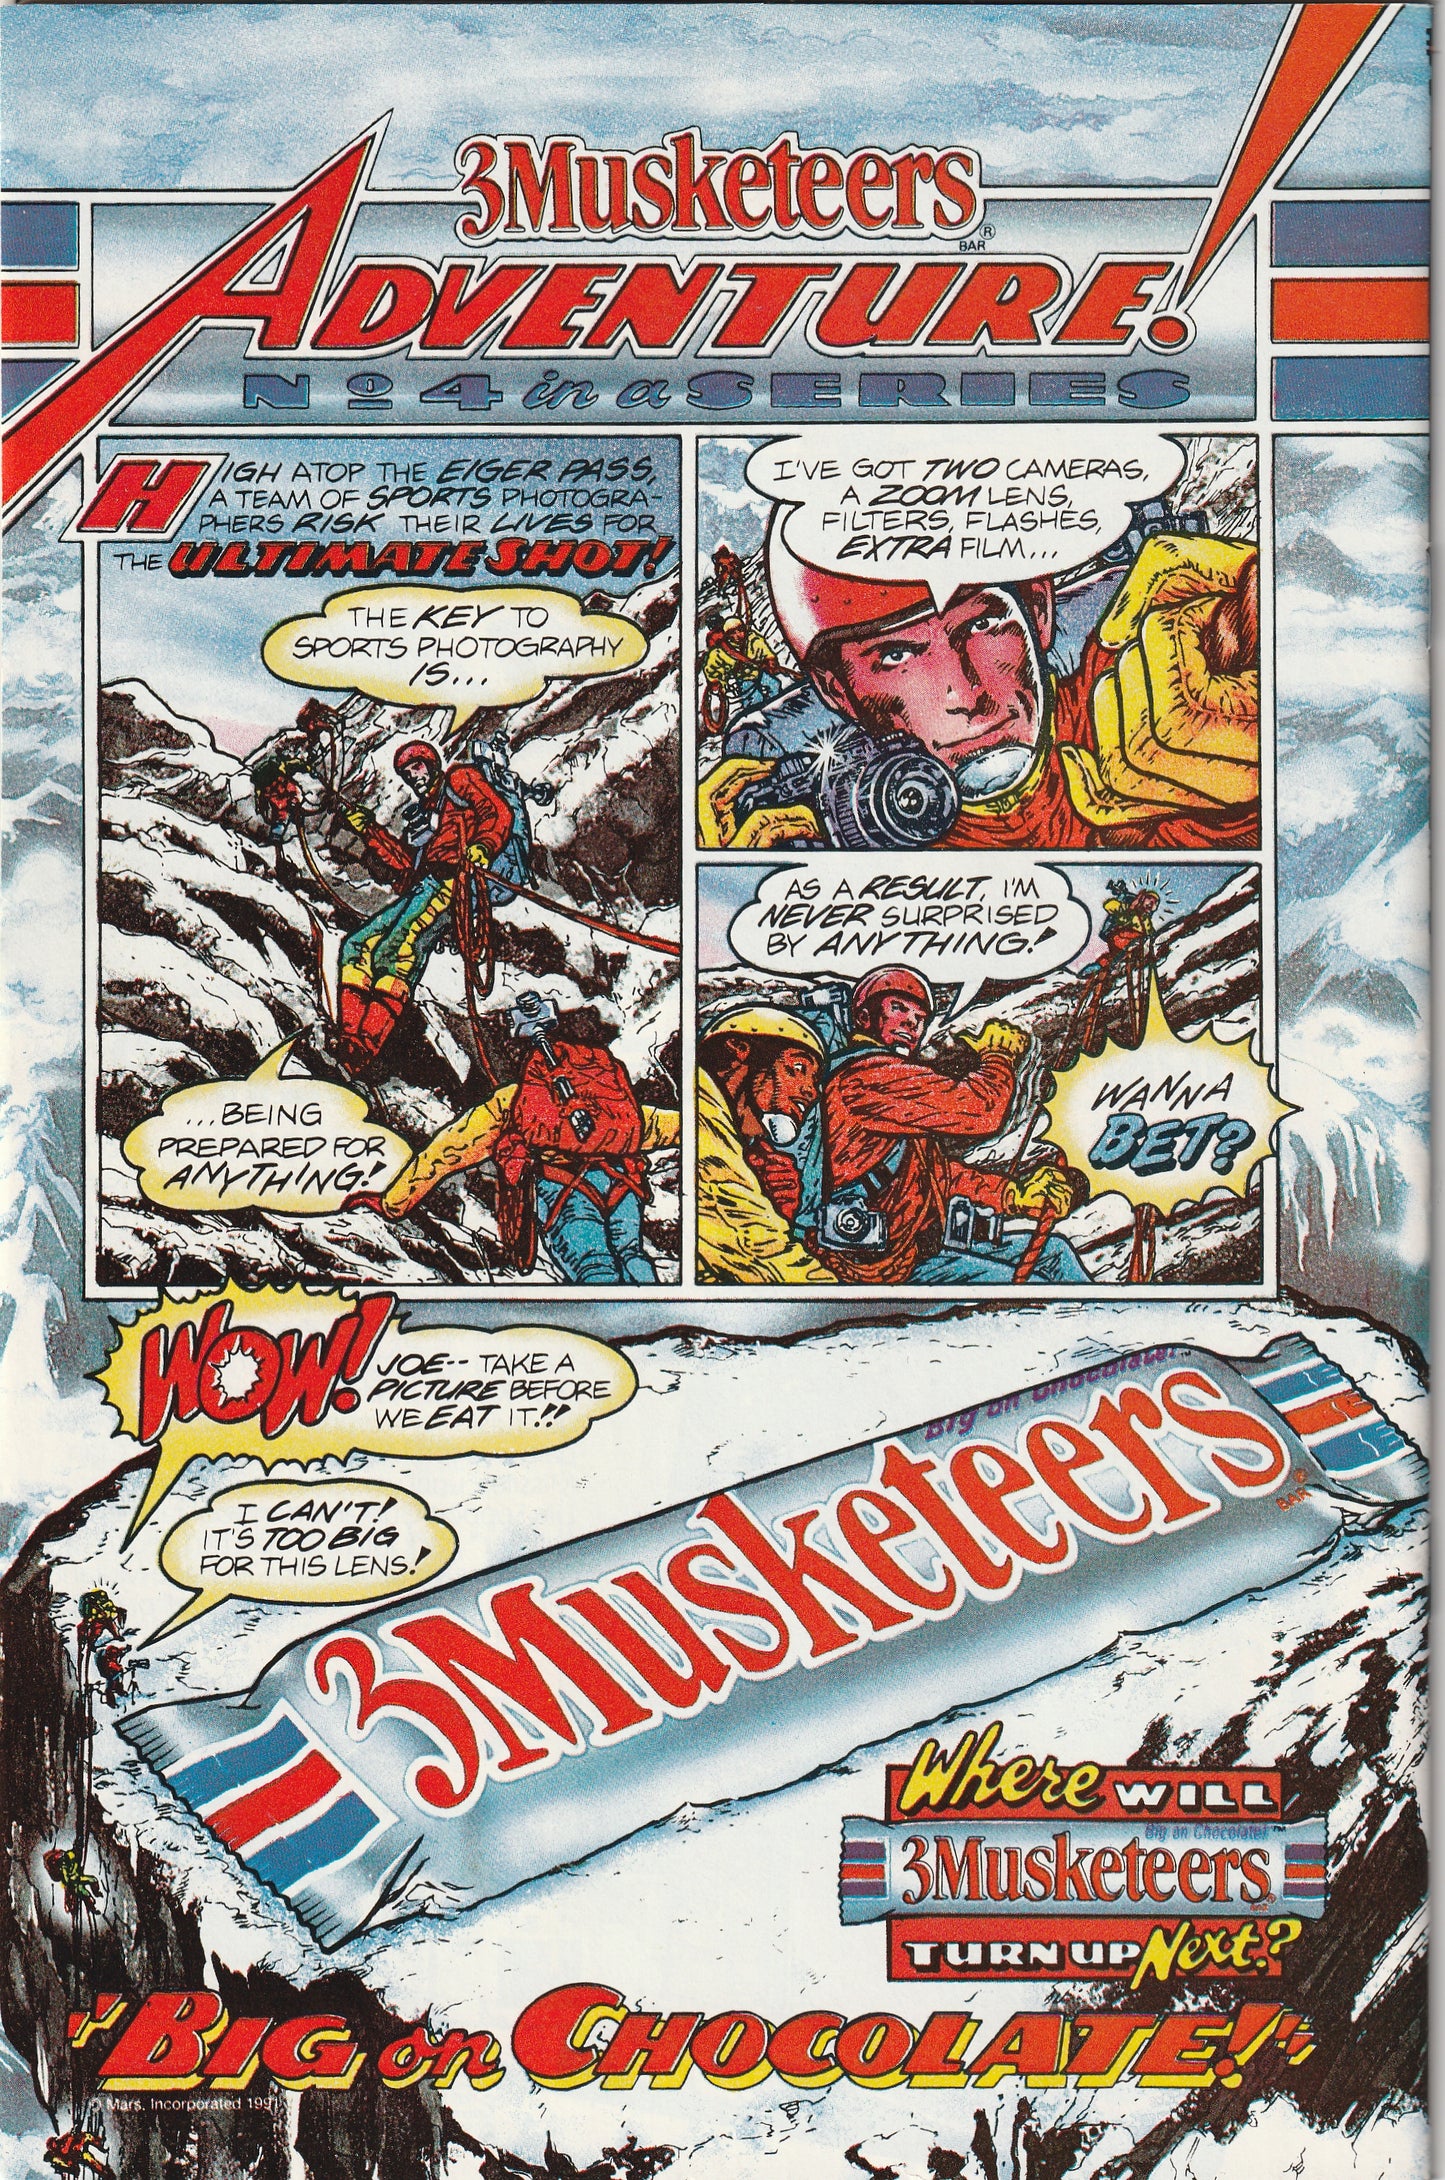 Flash #50 (Volume 2, 1991) - Double size